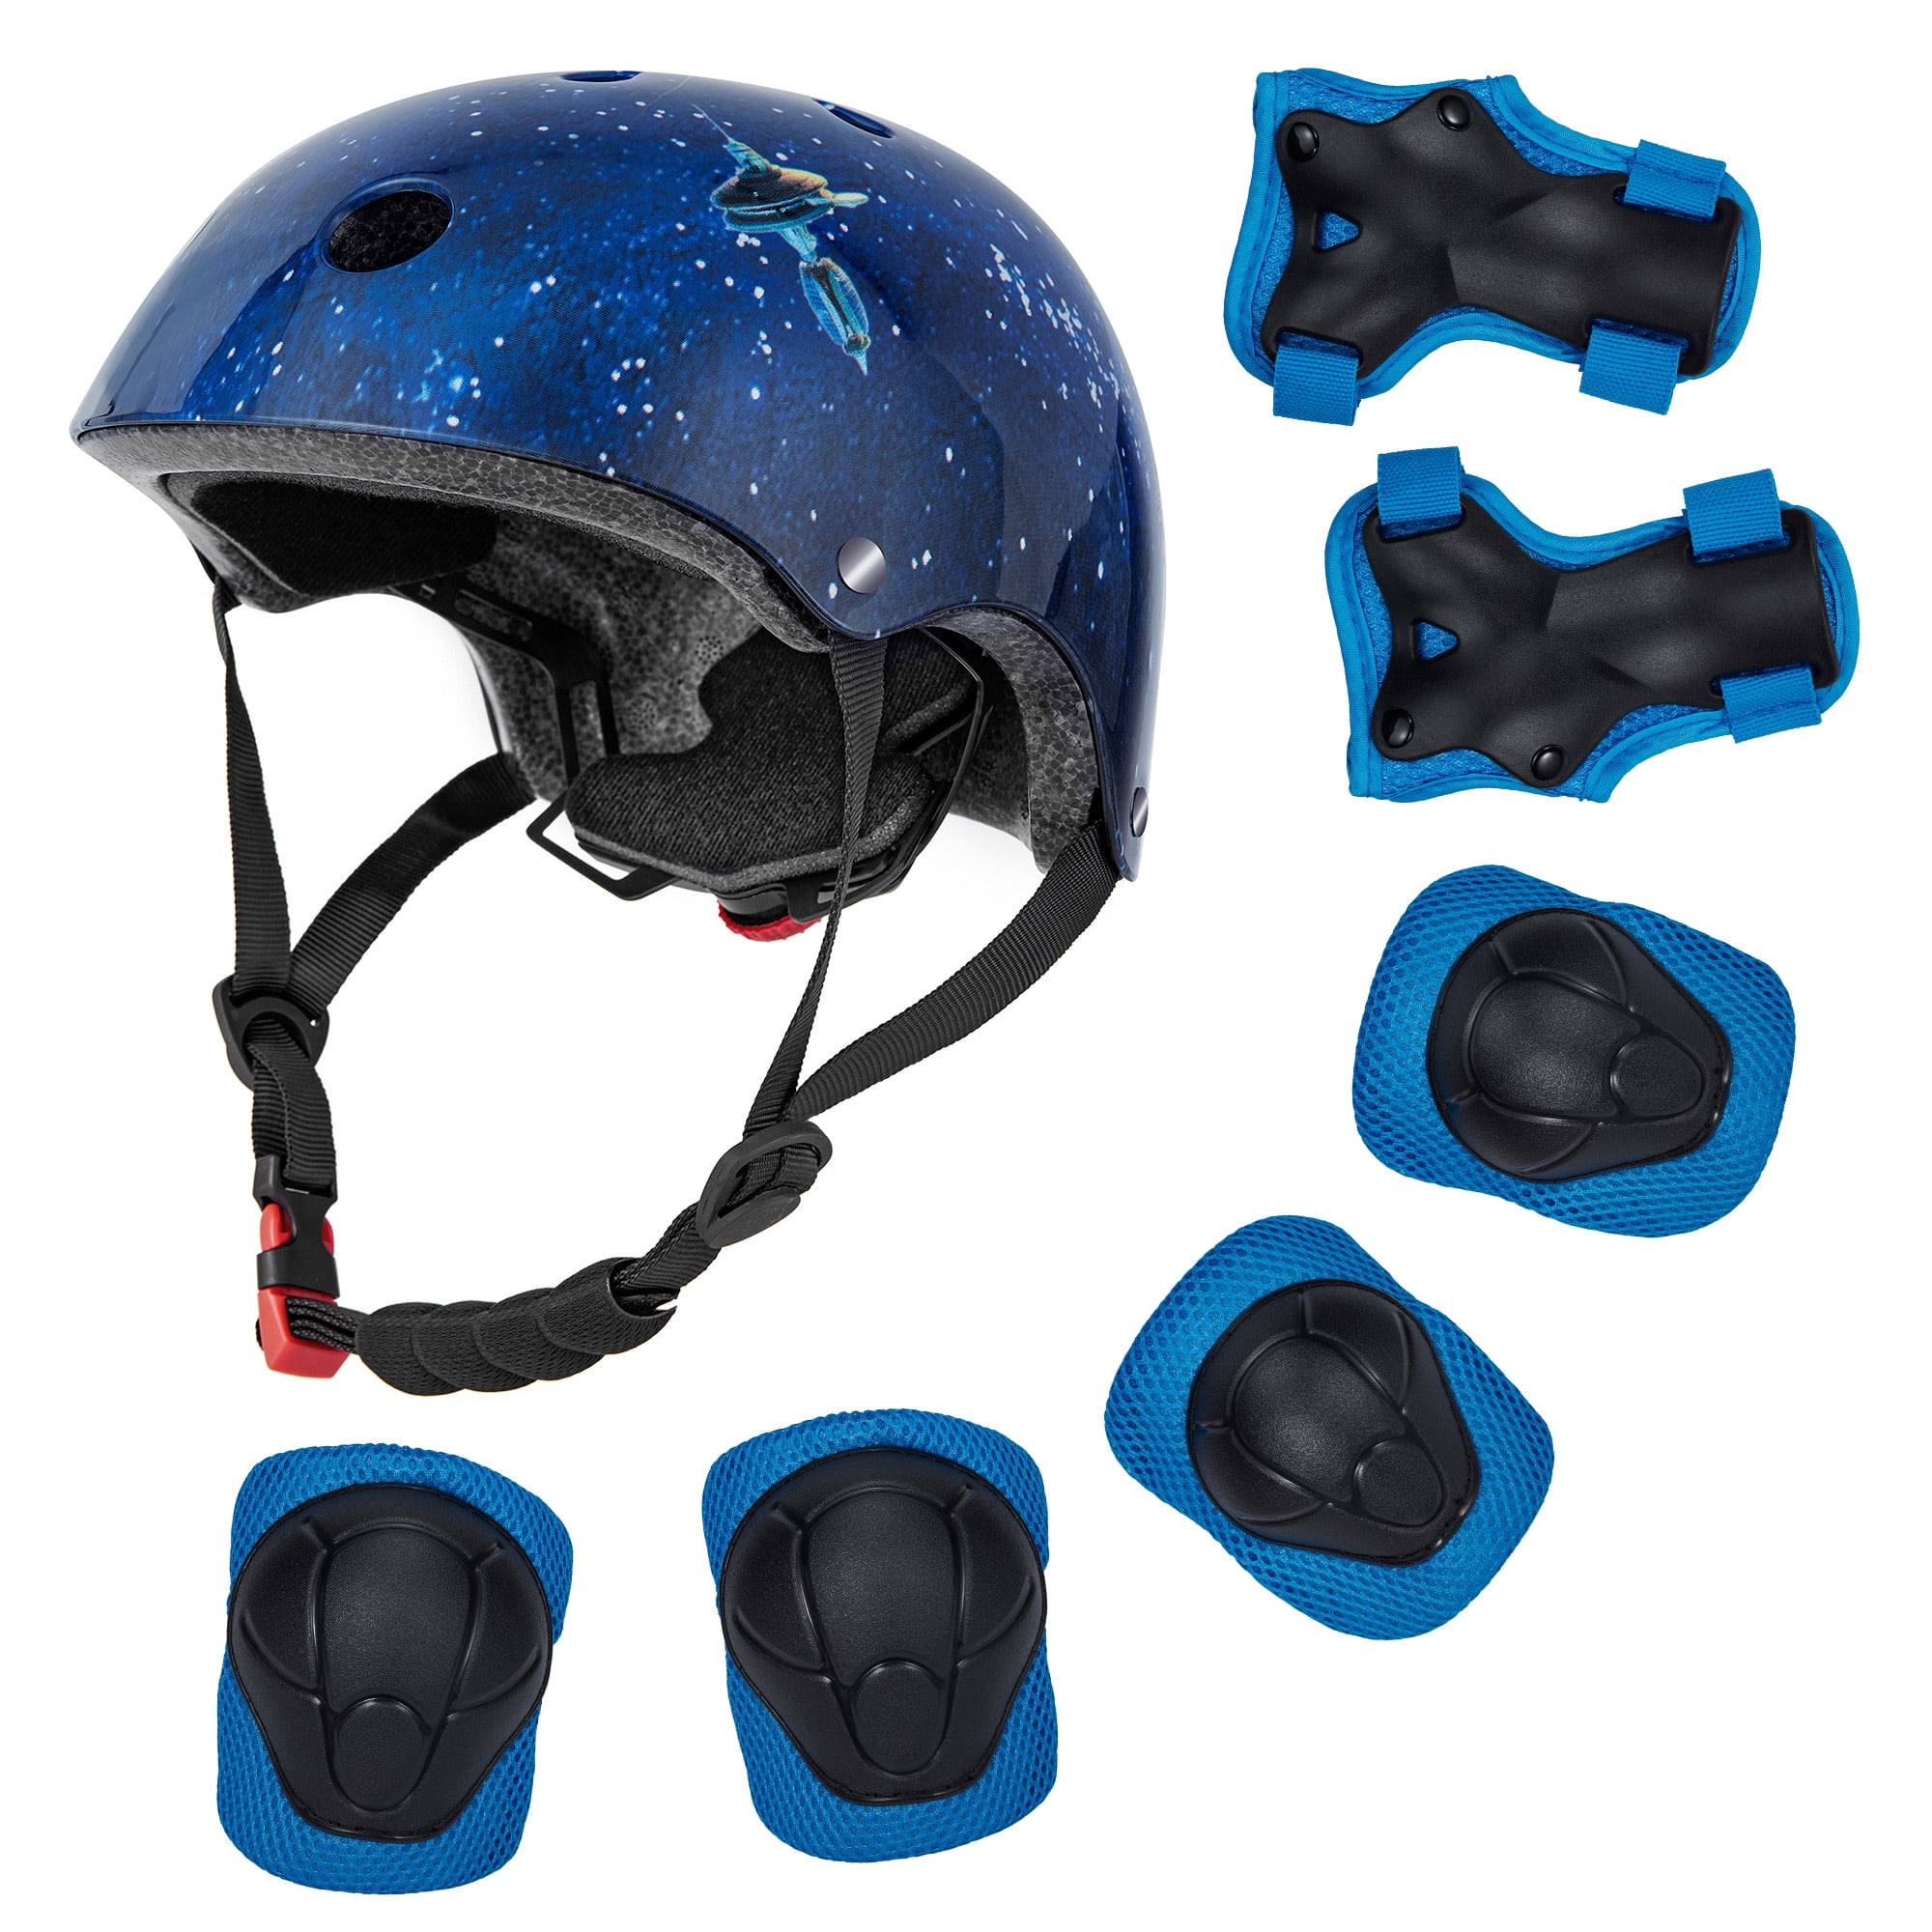 Details about   7Pcs Kids Bike Roller Skating Riding Helmet Pads Set Knee Elbow Wrist Gear Guard 